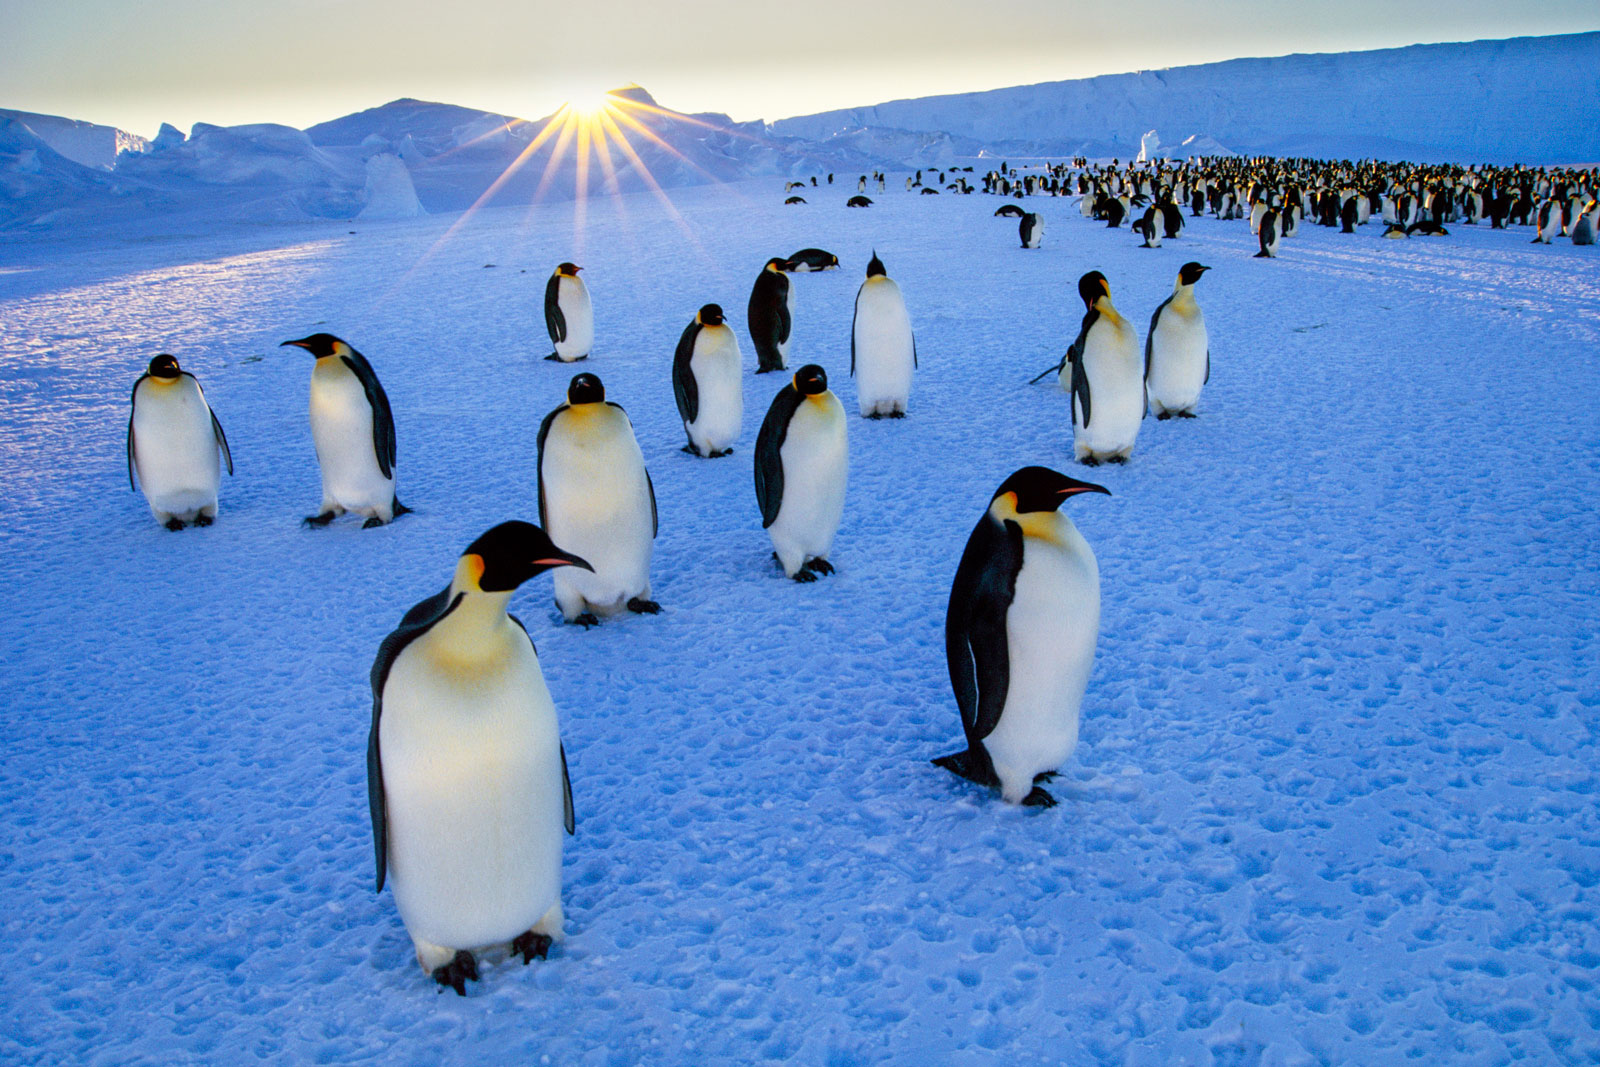 Emperor penguins and setting sun, Weddell Sea, Antarctica